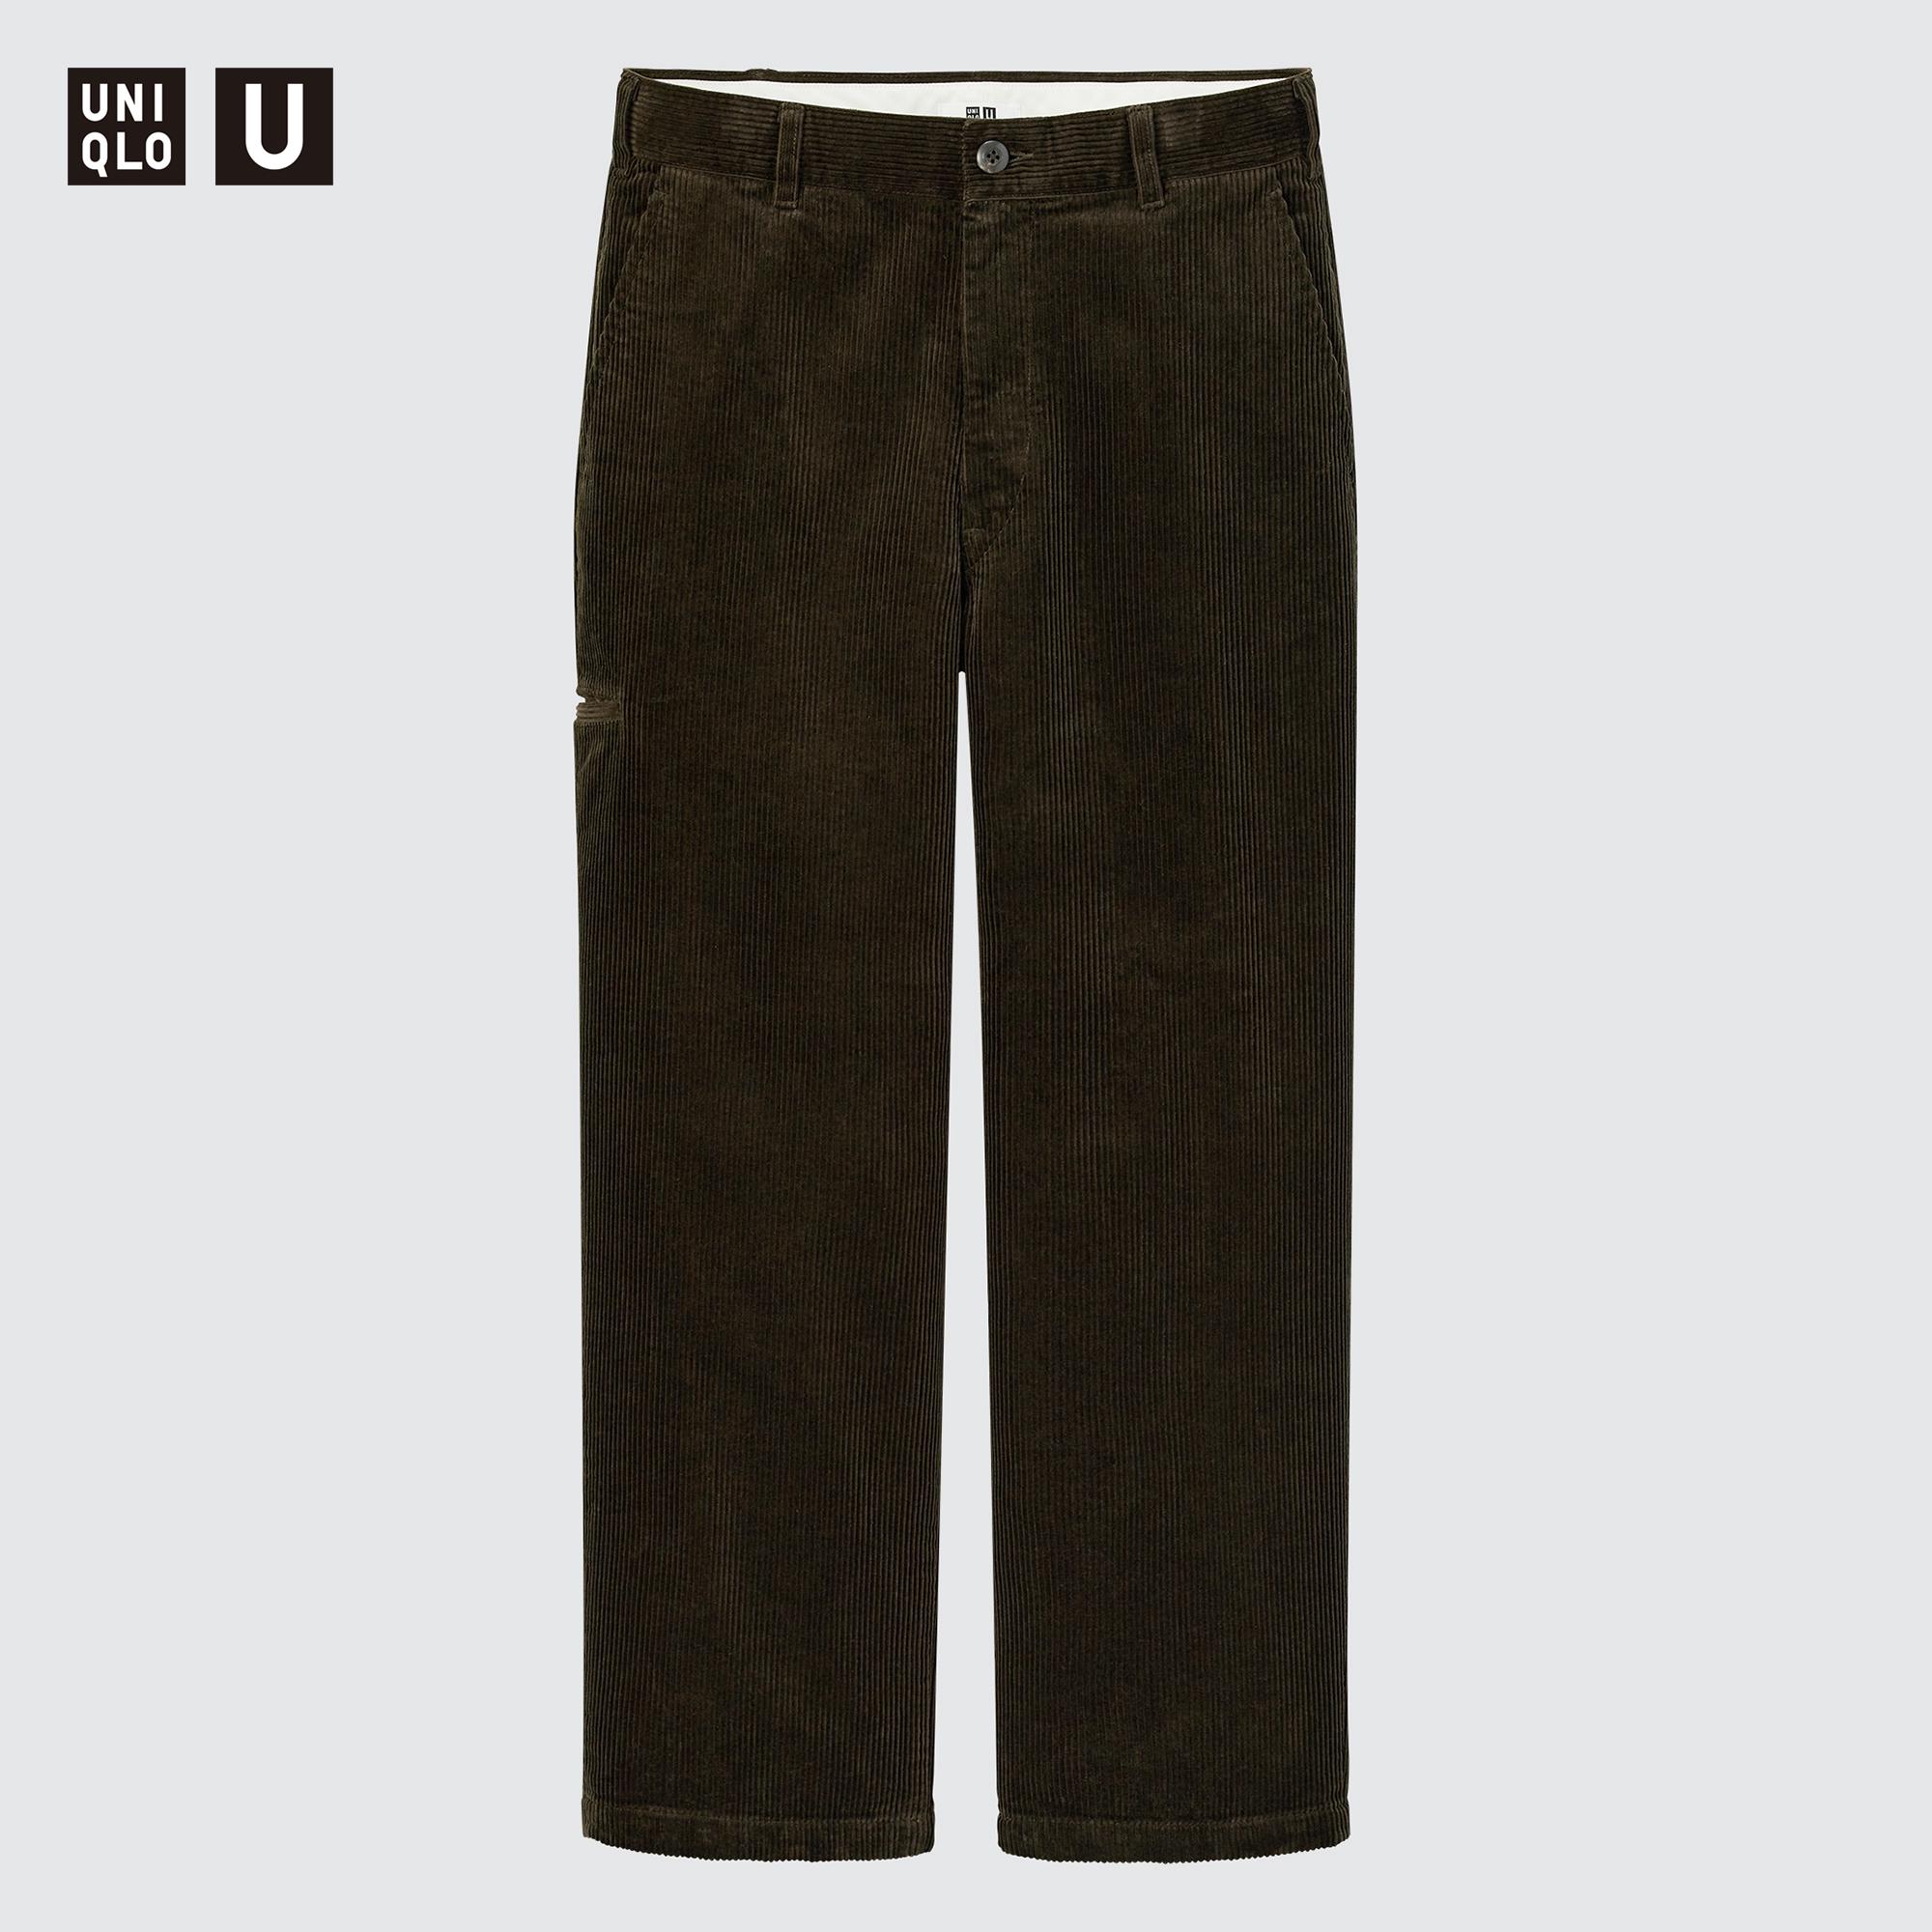 Light Brown Corduroy Pants - Straight Legs Pants - Coords - Lulus